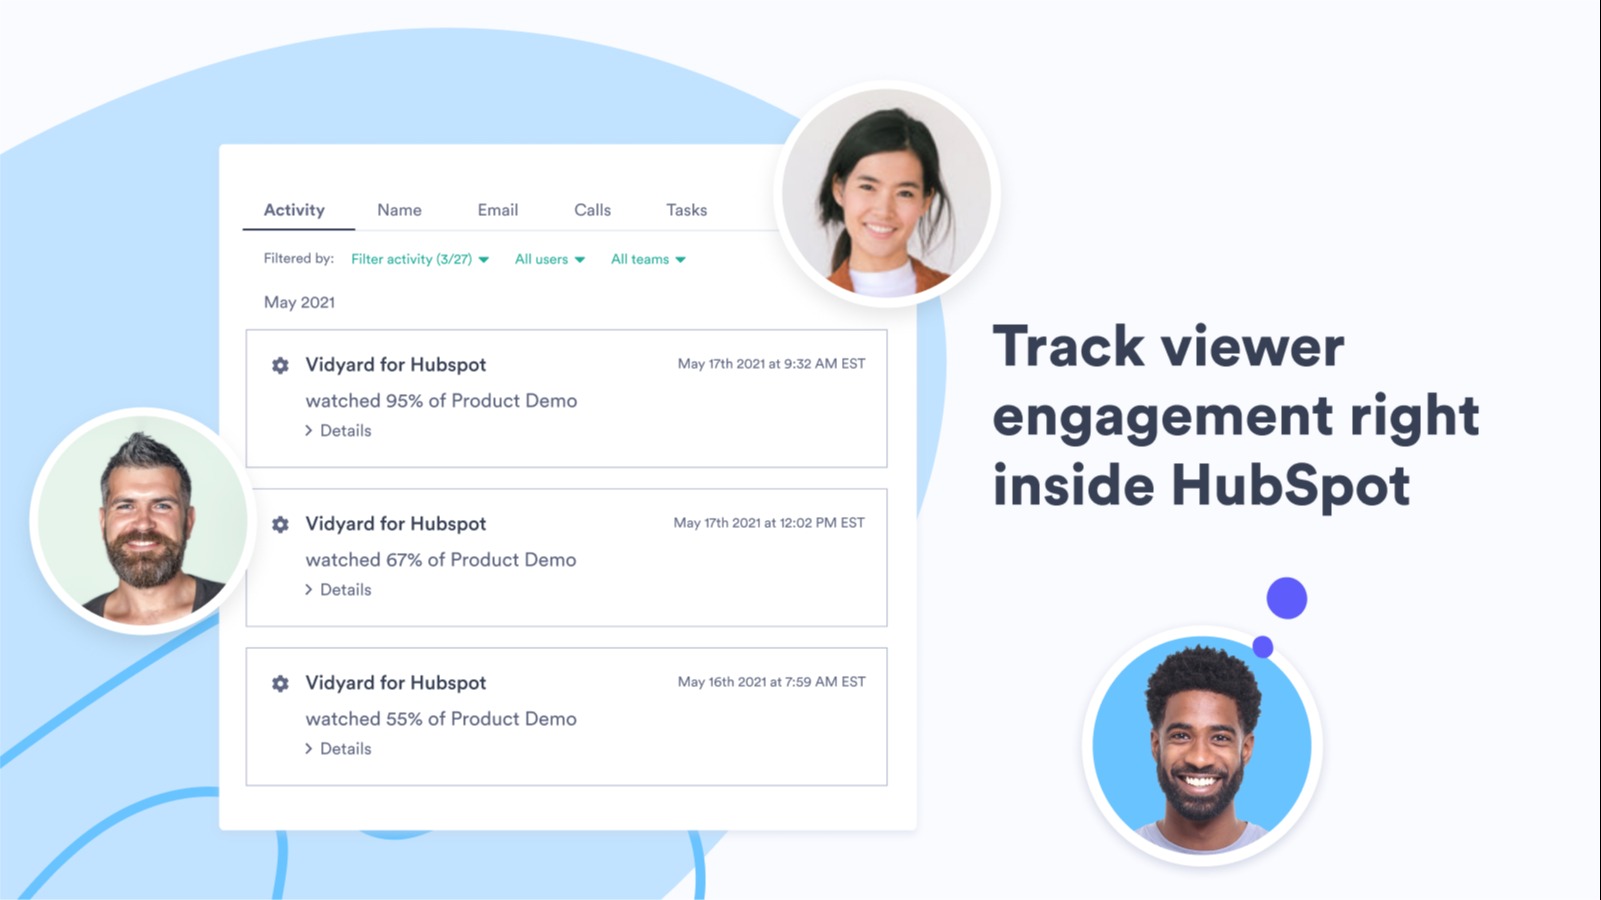 Track viewer engagement right inside HubSpot